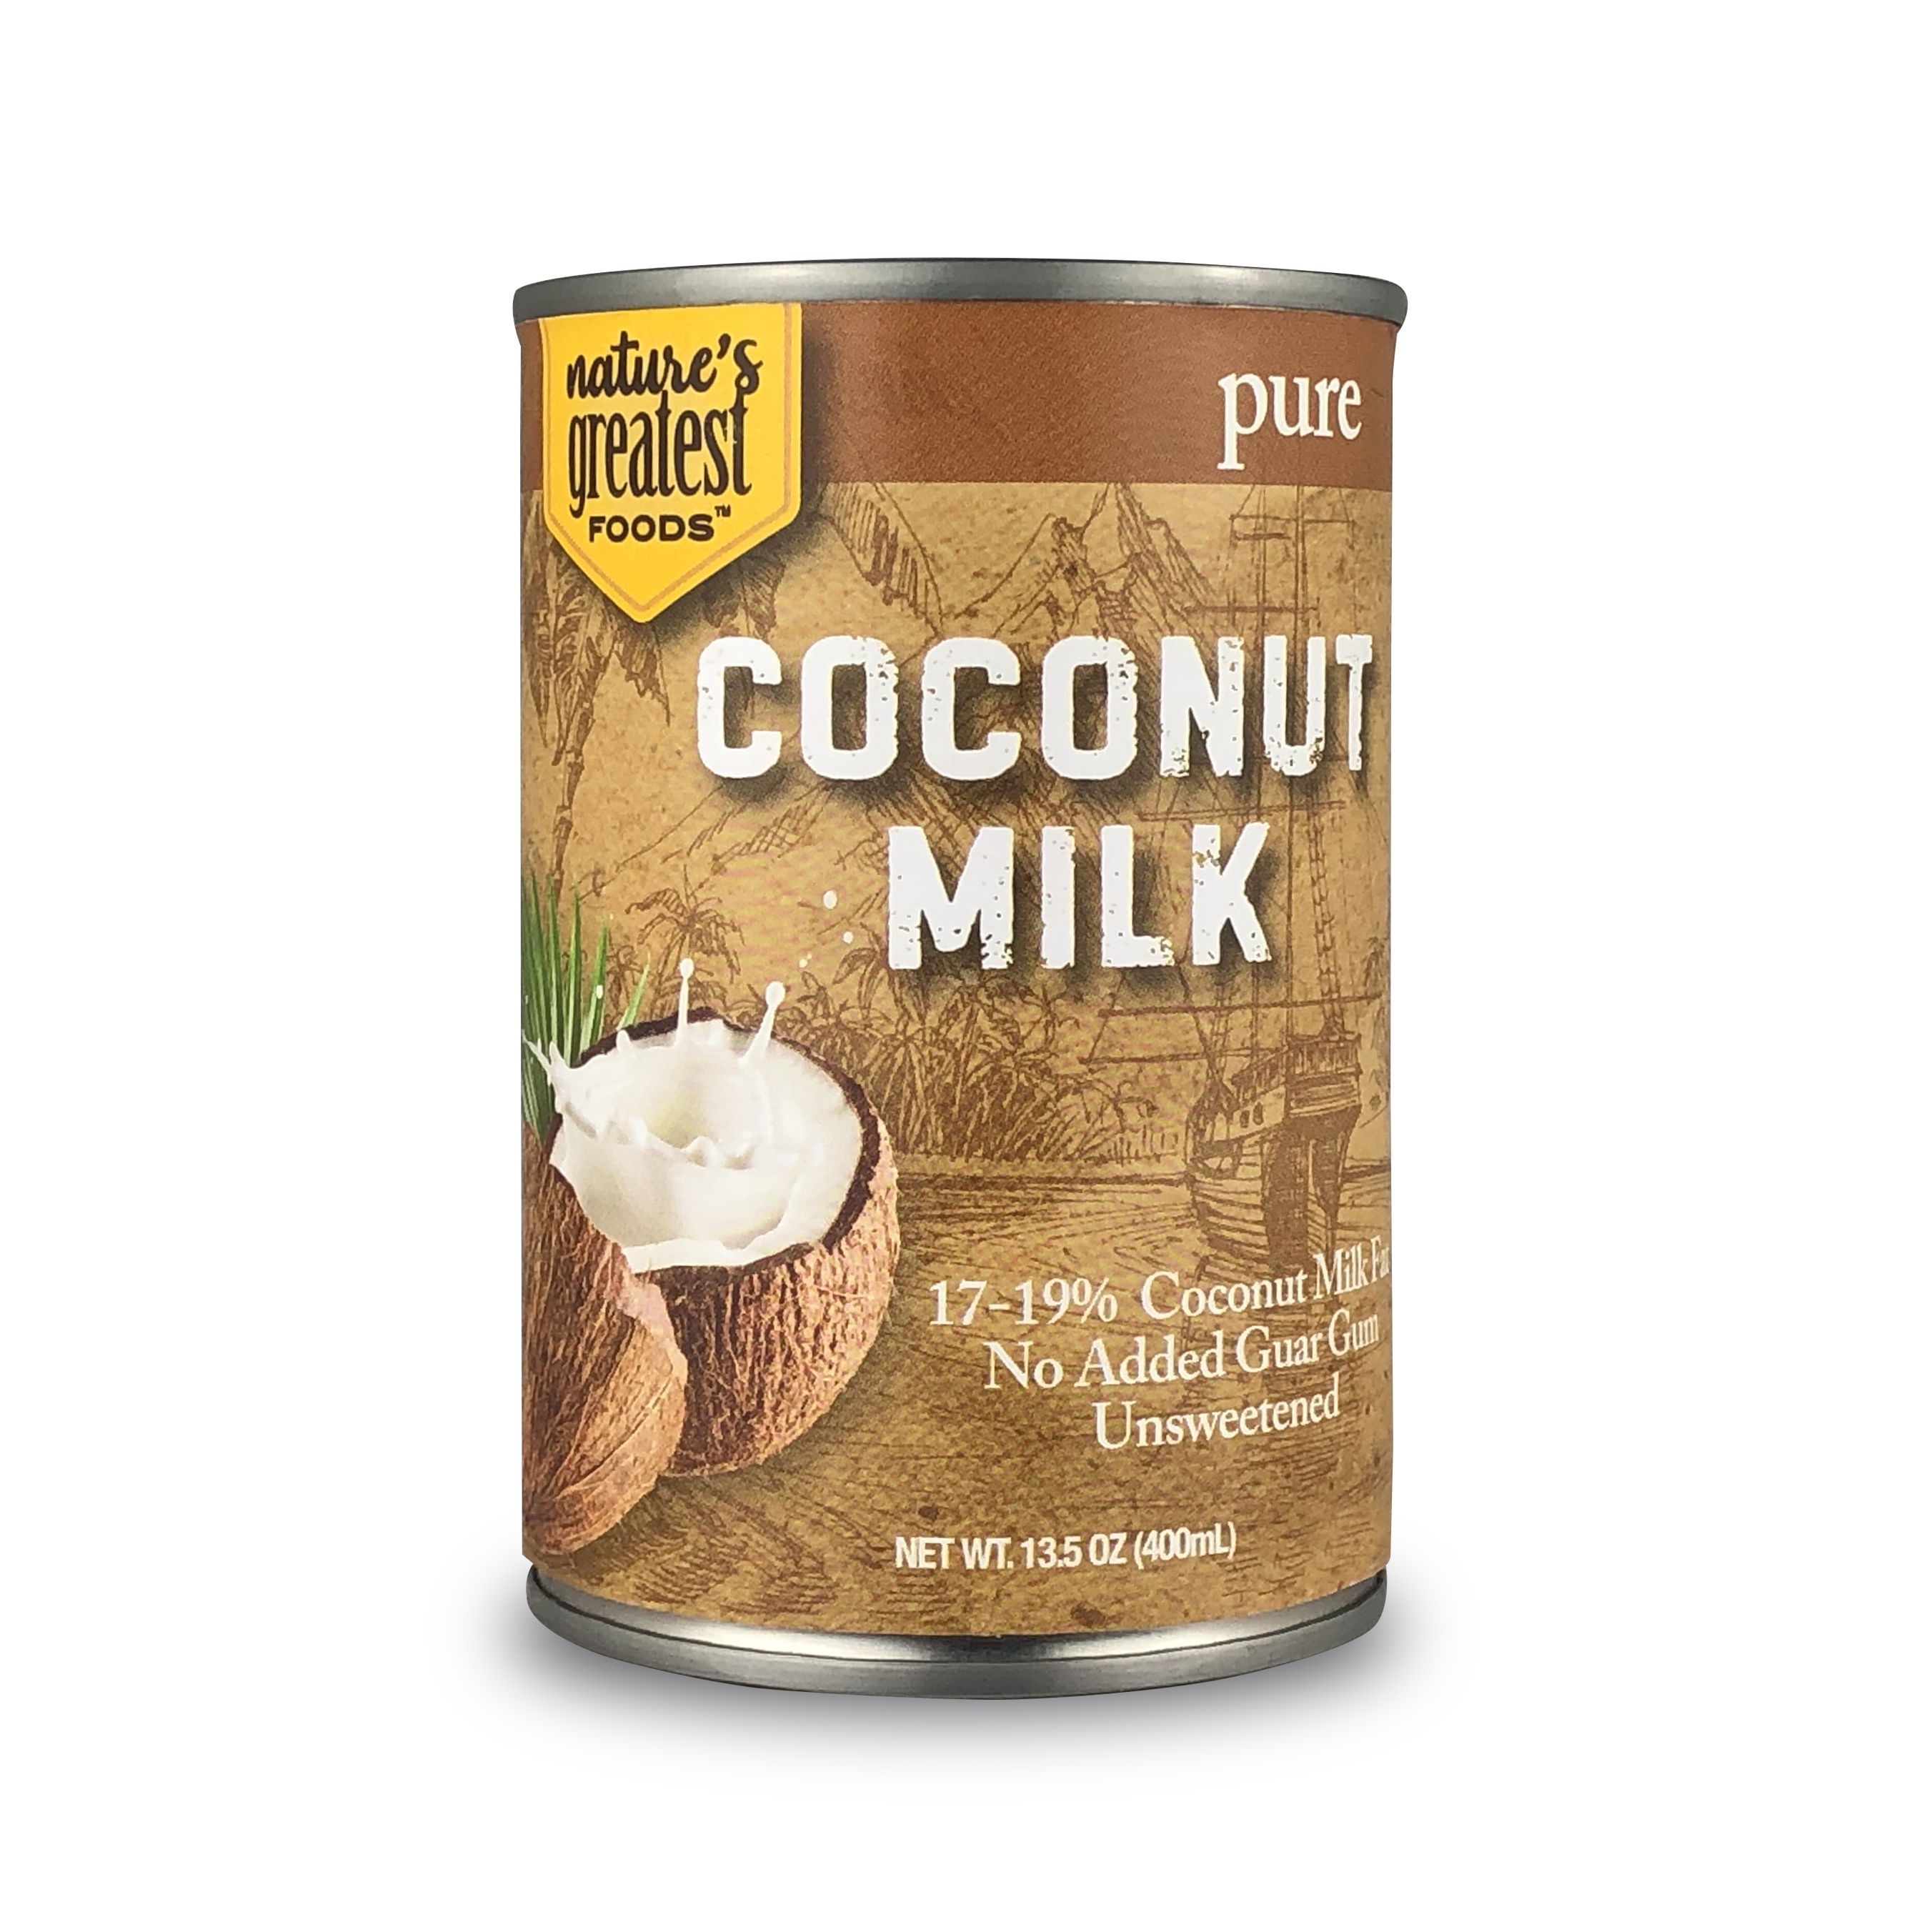 Nature's Greatest Foods Organic Pure Coconut Milk 12 units per case 13.5 oz